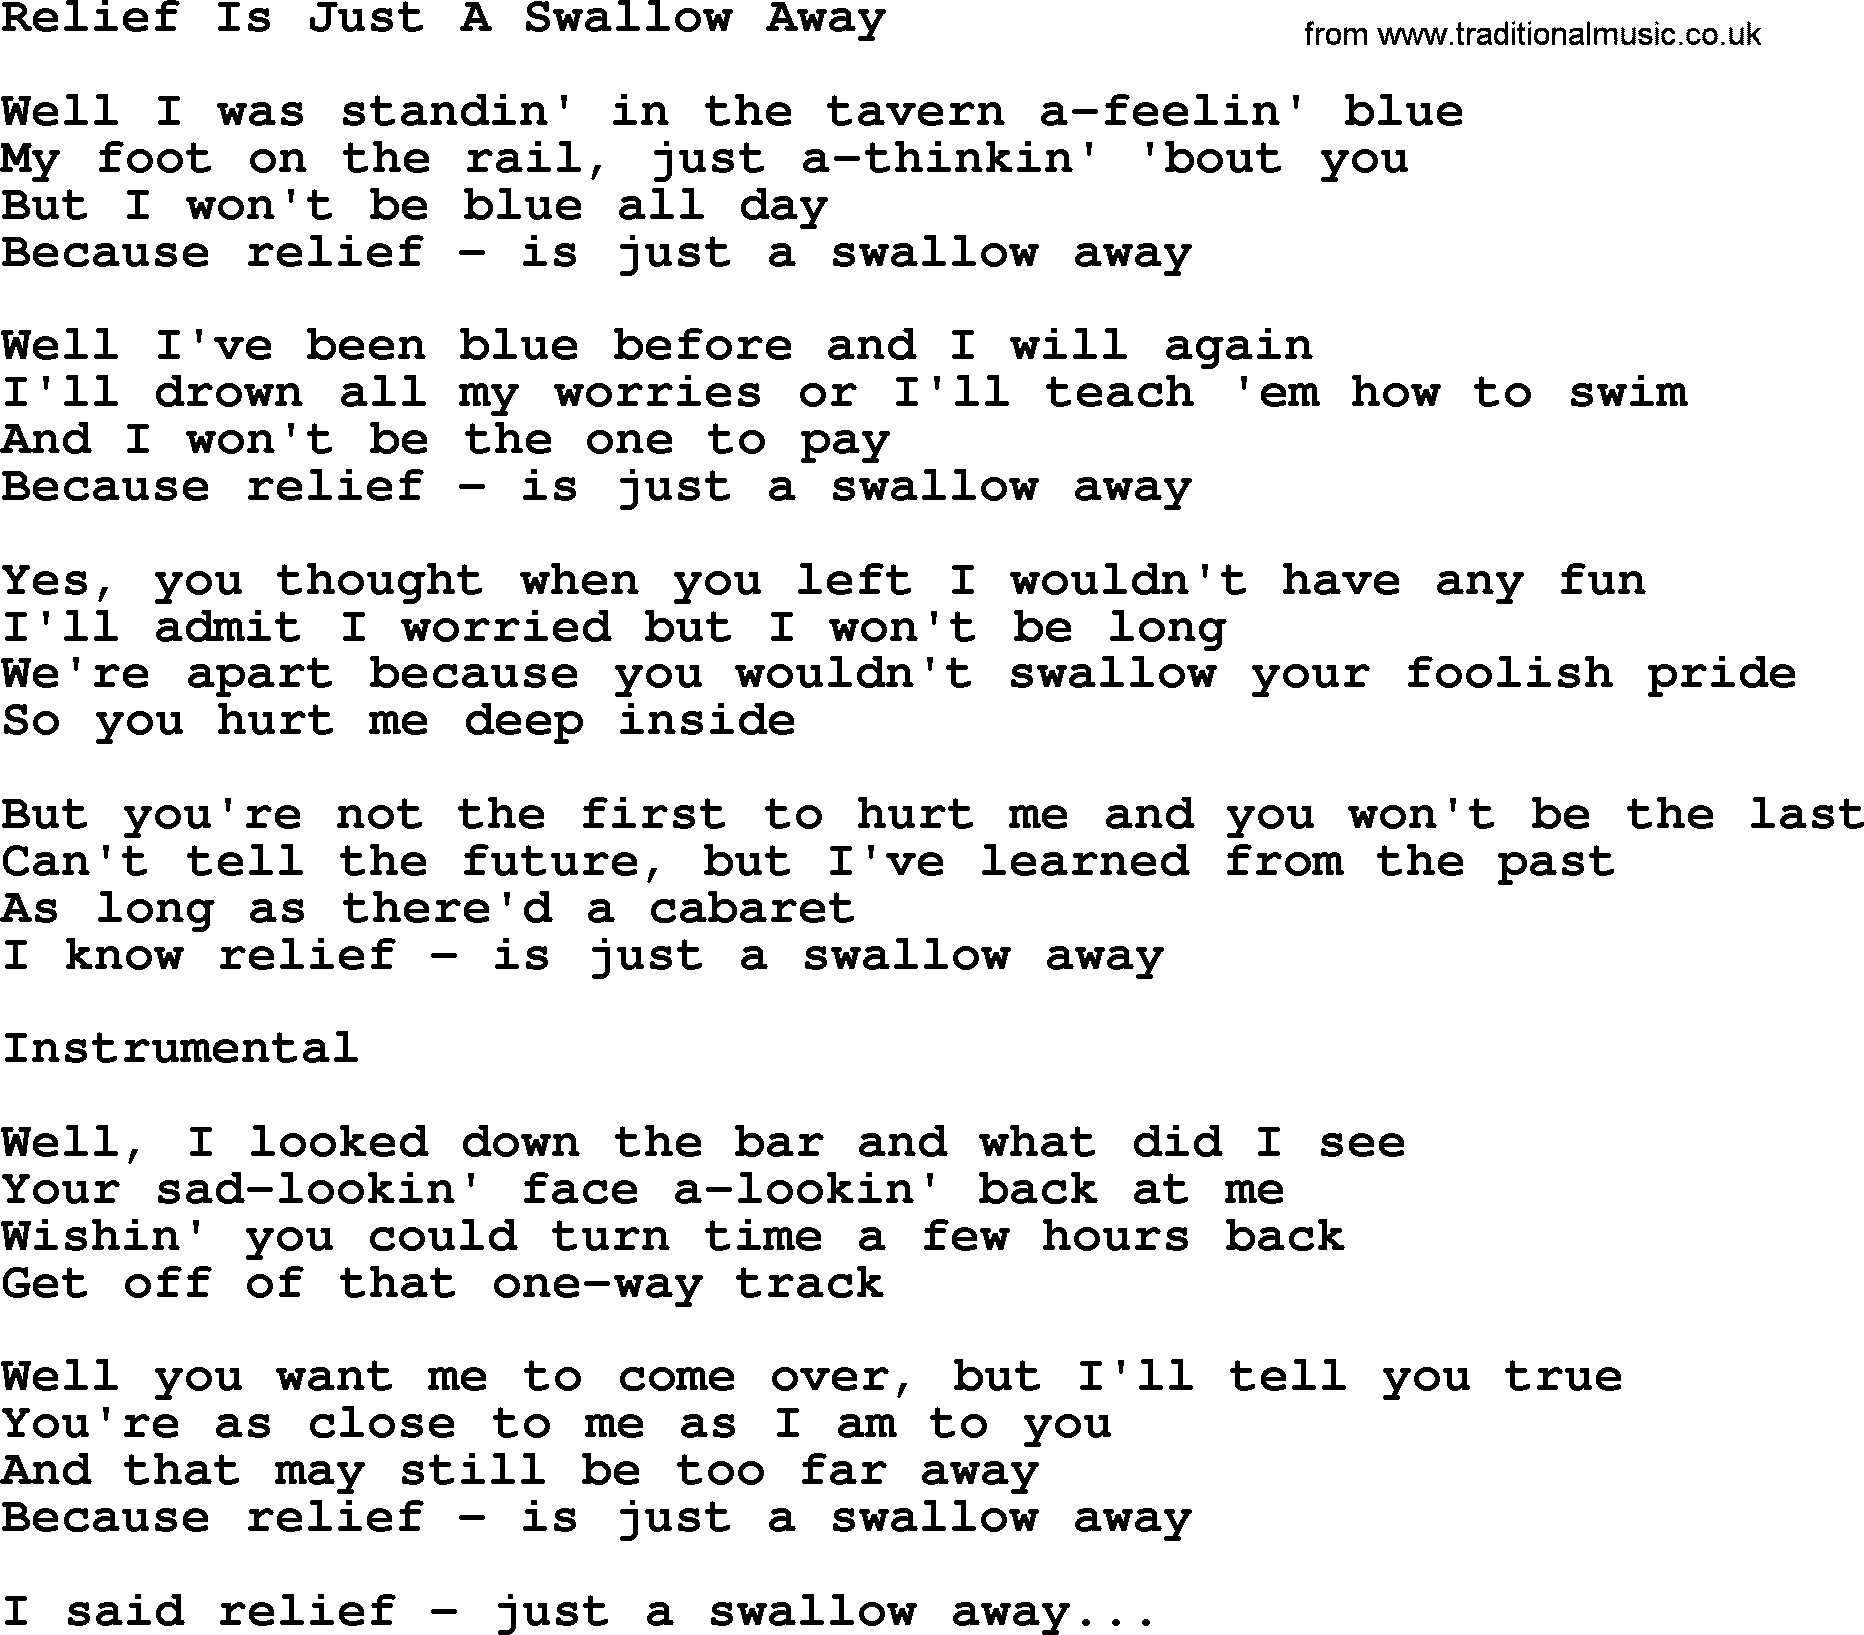 George Jones song: Relief Is Just A Swallow Away, lyrics